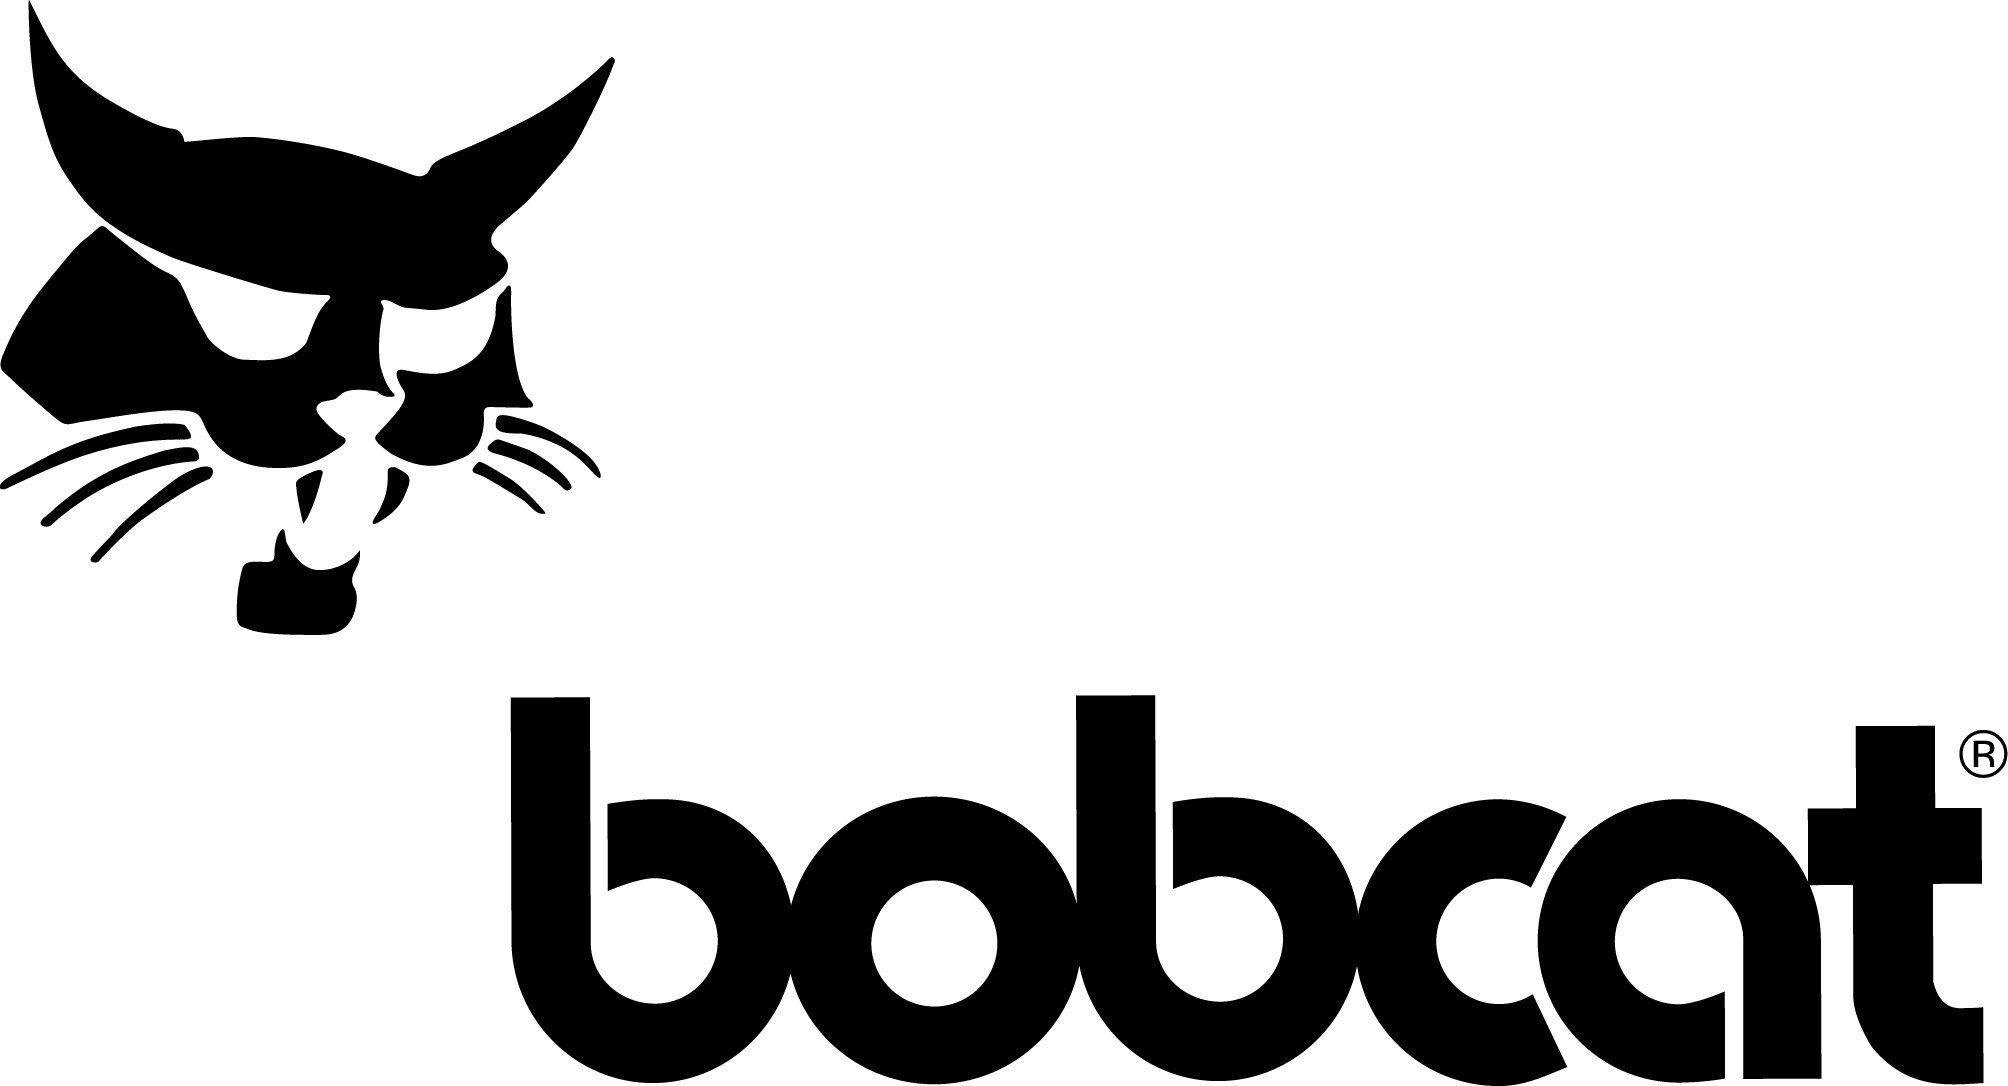 Bobcat Company Logo - Designing a New Breed of Skid-Steer Loaders | Bobcat Blog